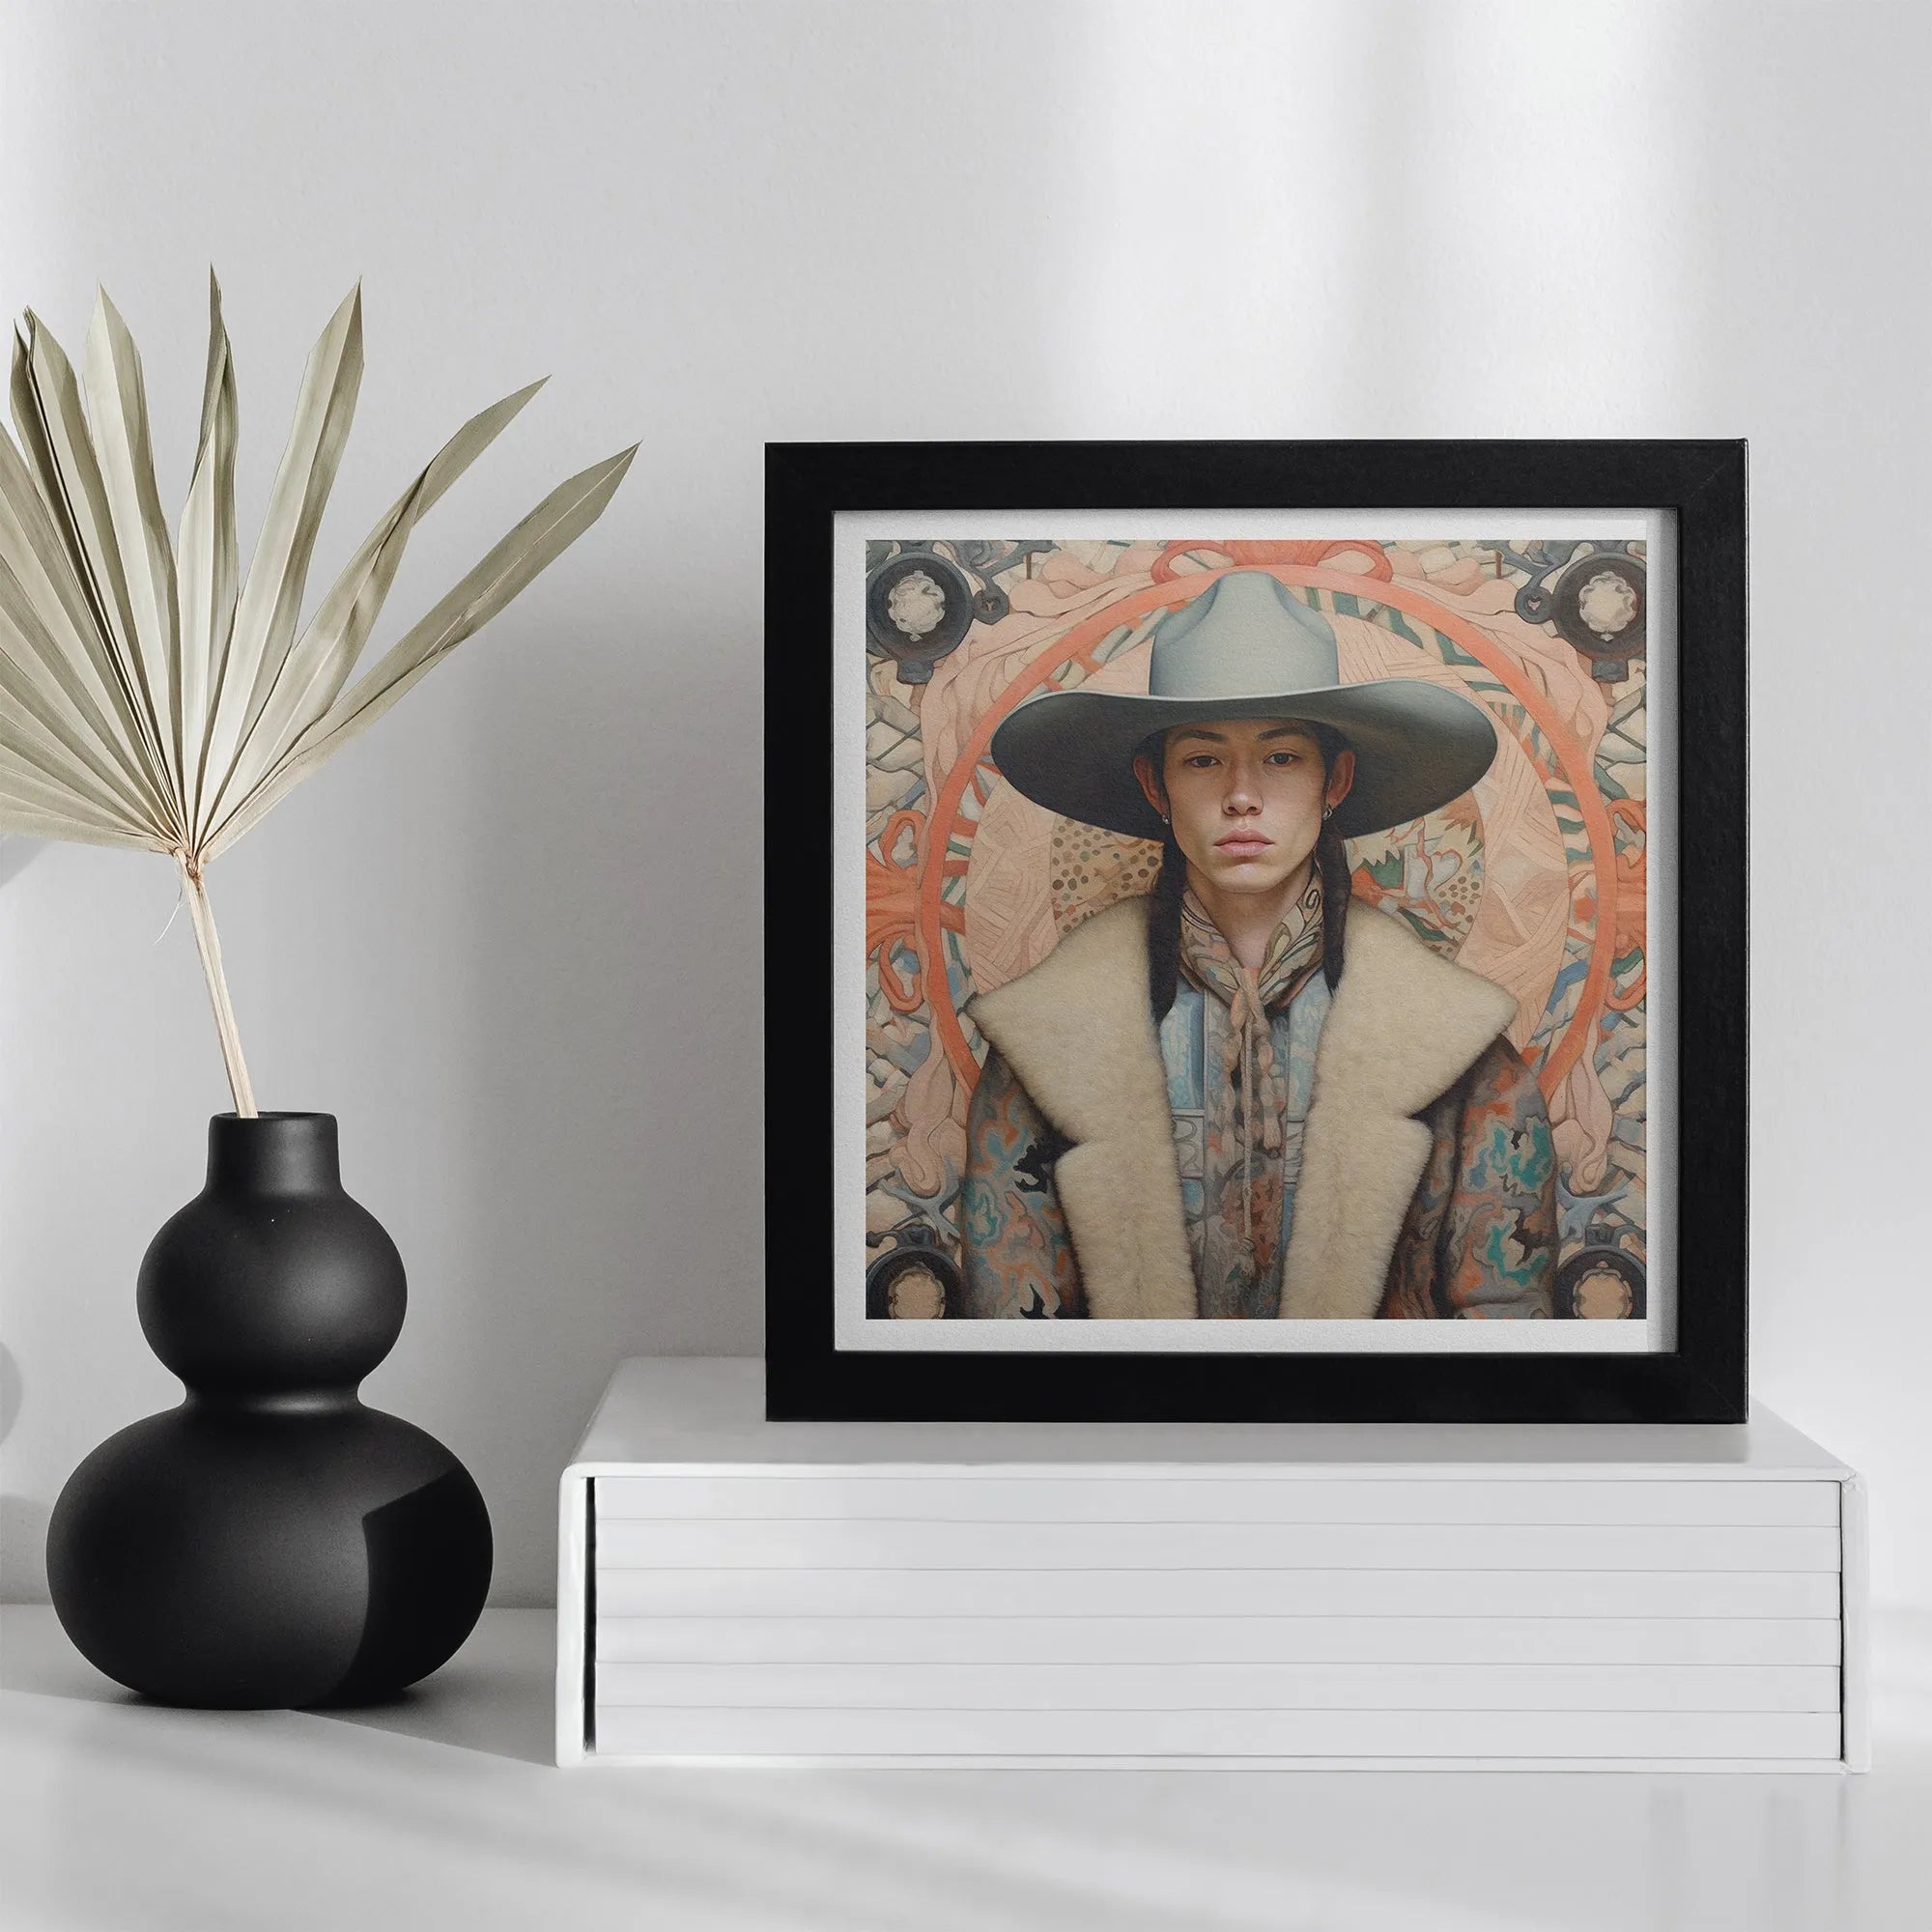 Jacy - Gay Native American Cowboy Art Print - Queerart Dandy - 16’x16’ - Posters Prints & Visual Artwork - Aesthetic Art